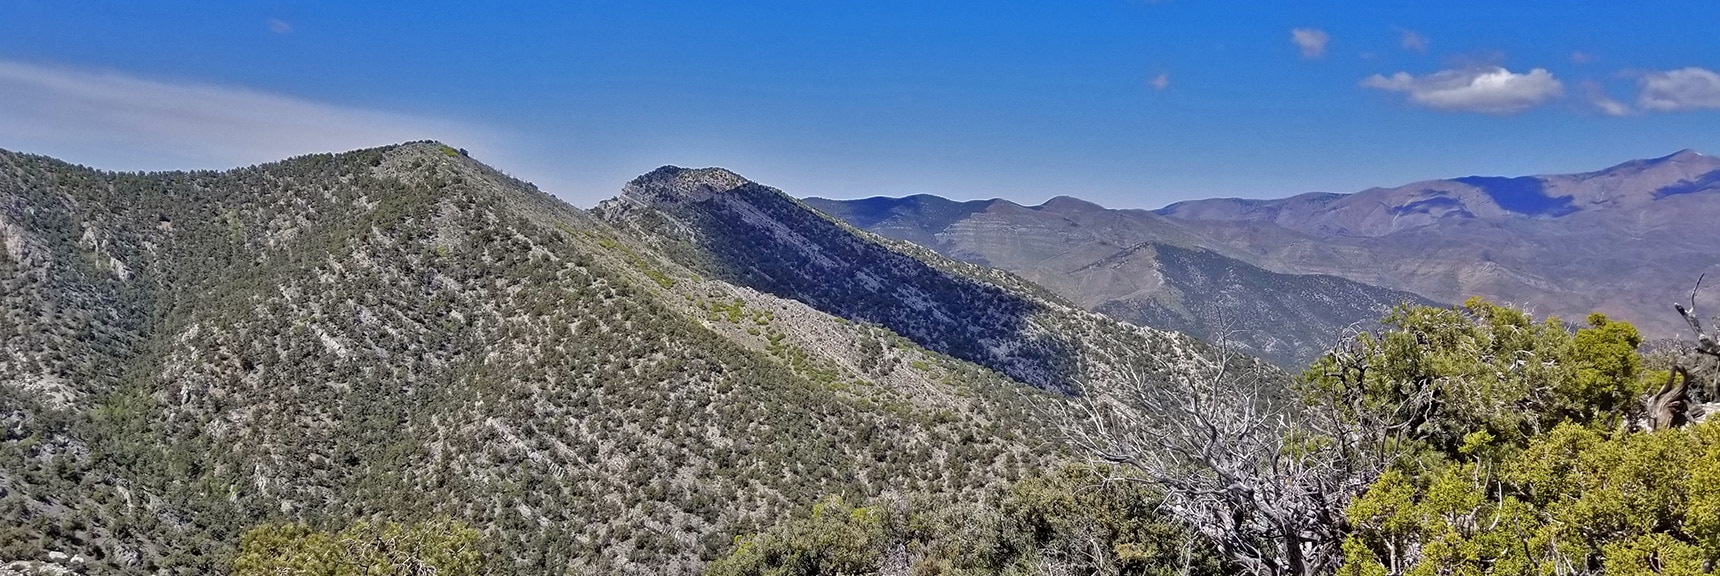 La Madre Mountains Wilderness Overlook | La Madre Mountains Wilderness, Nevada